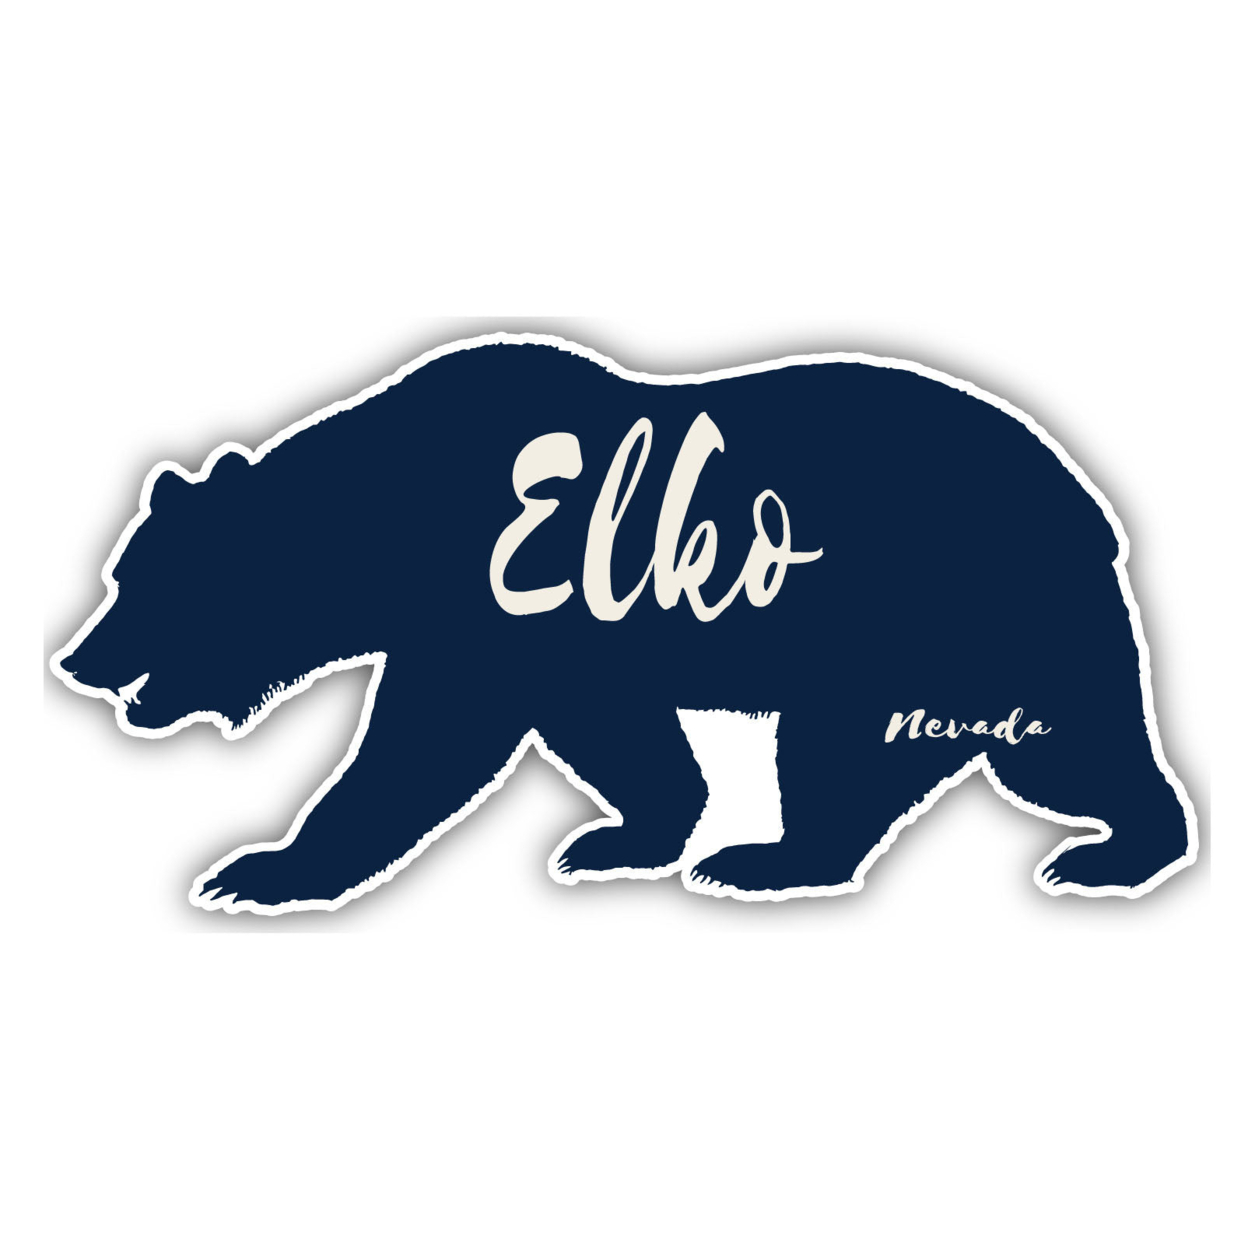 Elko Nevada Souvenir Decorative Stickers (Choose Theme And Size) - Single Unit, 6-Inch, Tent